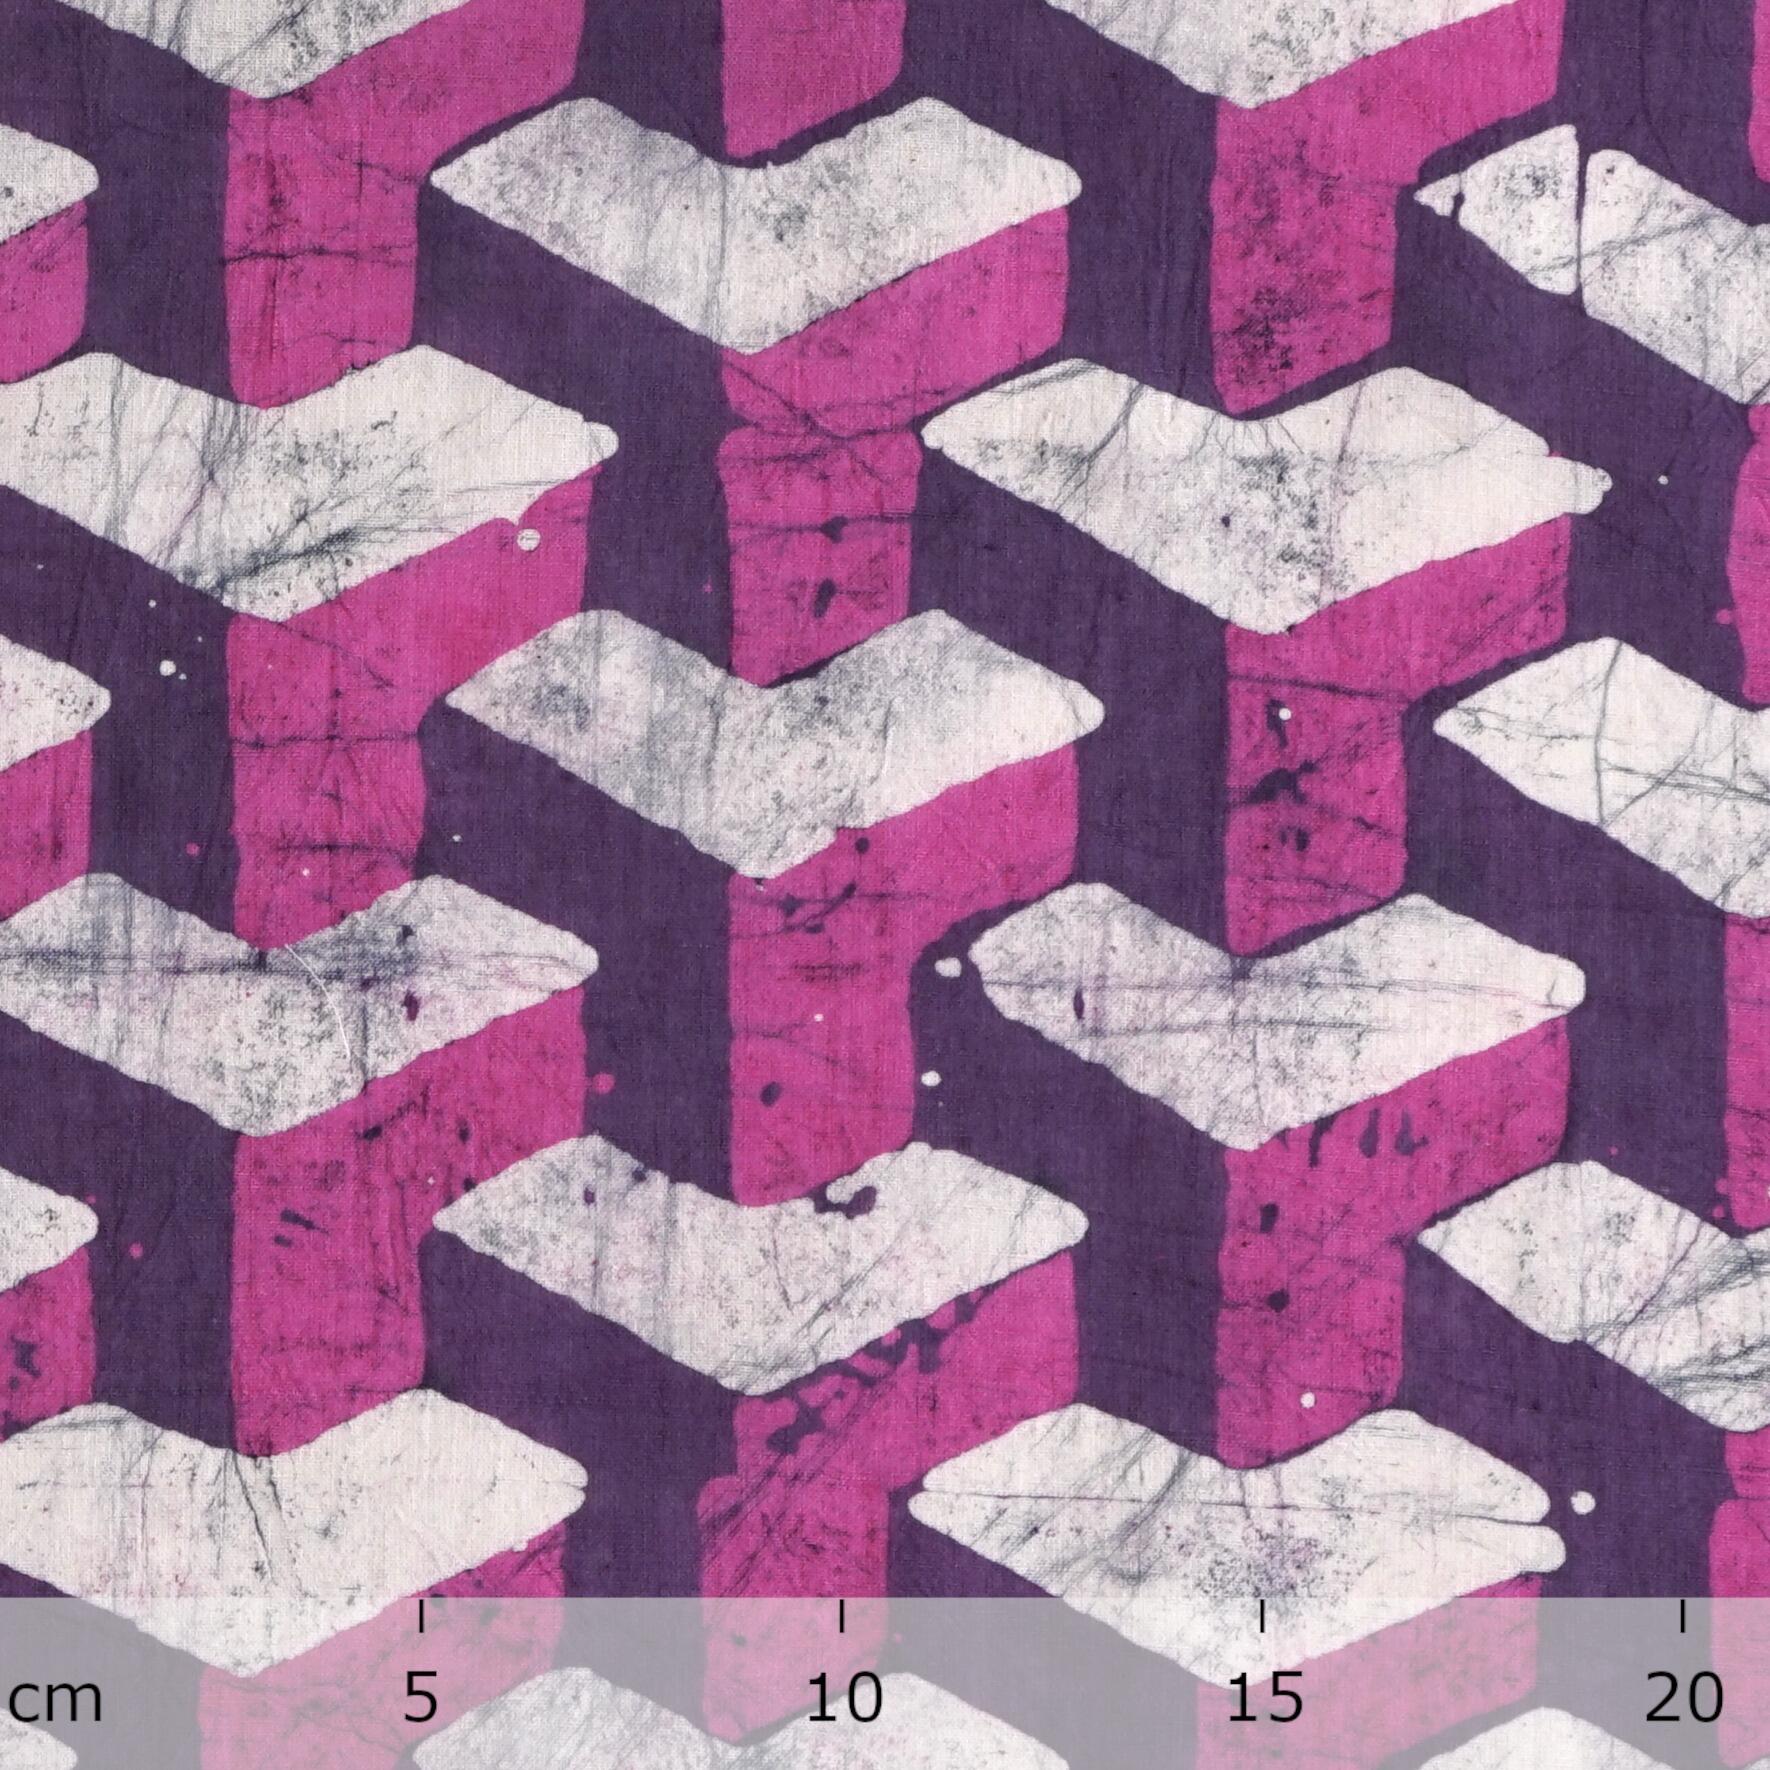 100% Block-Printed Batik Cotton Fabric From India - Purple Building Blocks Motif - Ruler